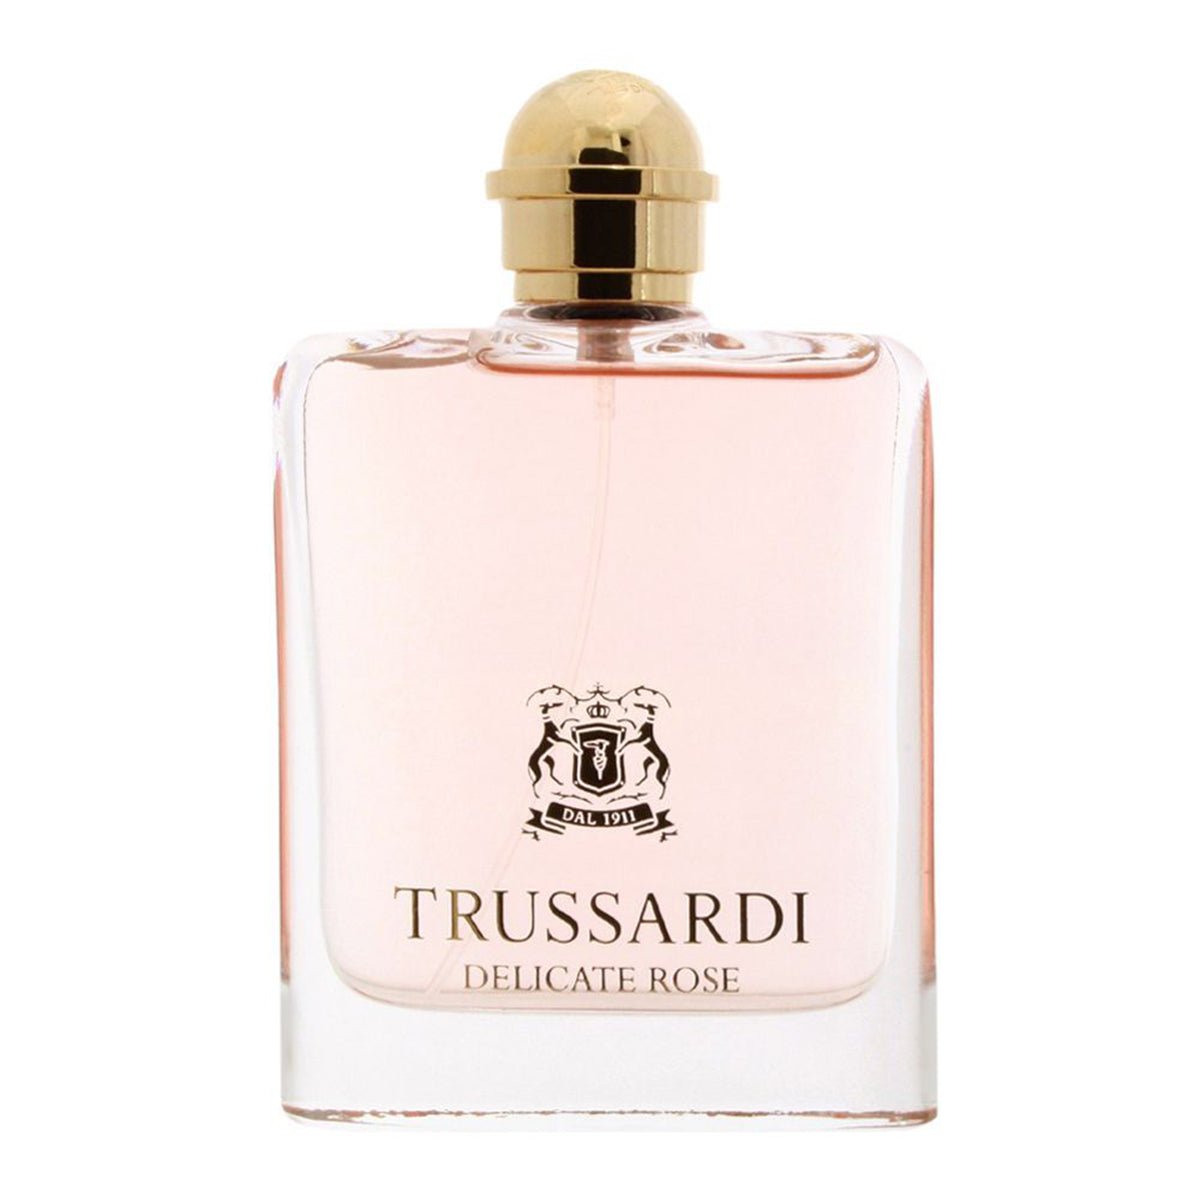 Trussardi Delicate Rose EDT Spray 100ml-Perfume - AllurebeautypkTrussardi Delicate Rose EDT Spray 100ml-Perfume